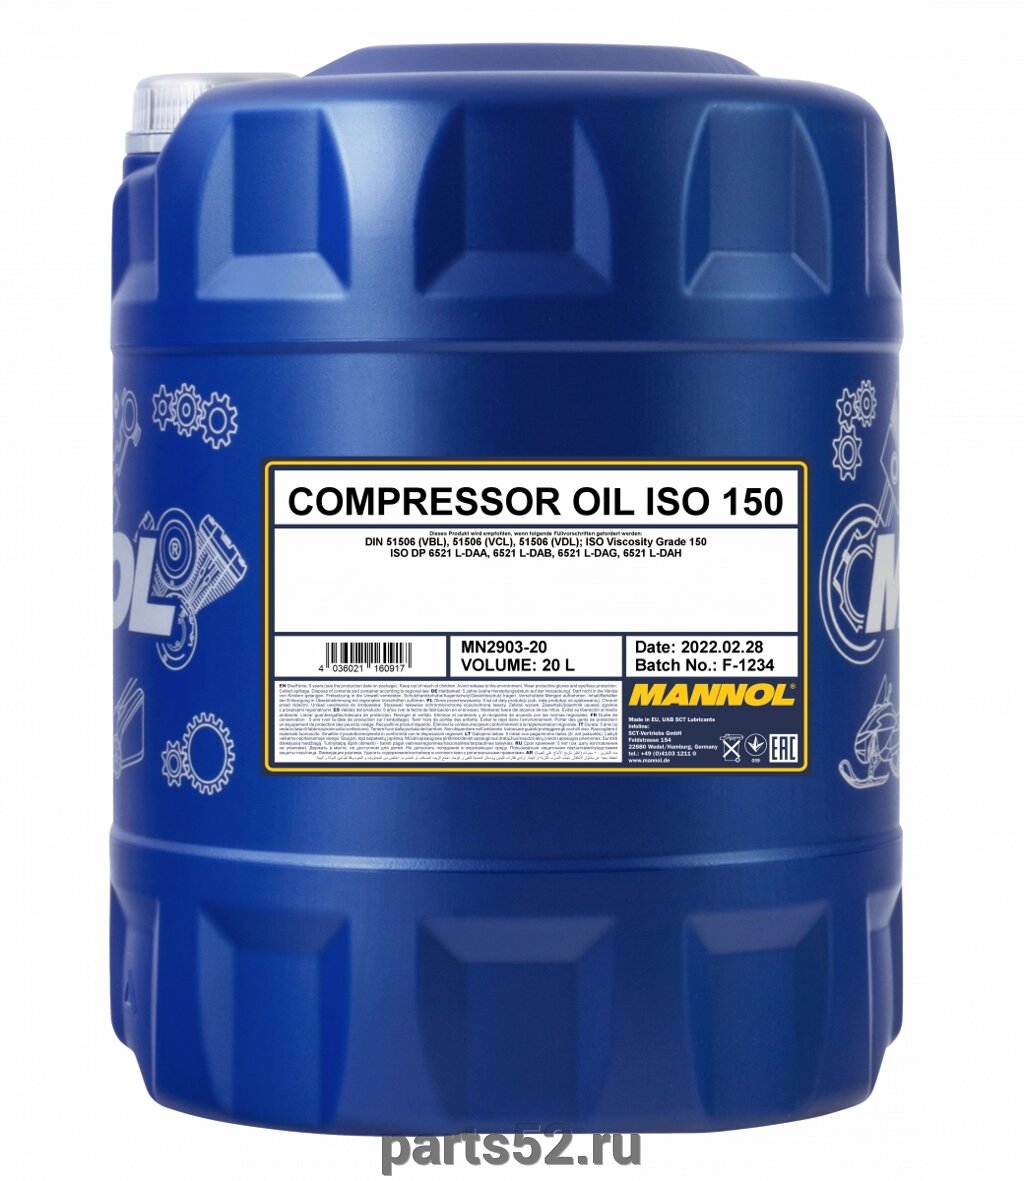 Масло компрессорное MANNOL 2903 Compressor Oil ISO 150, 20 л от компании PARTS52 - фото 1